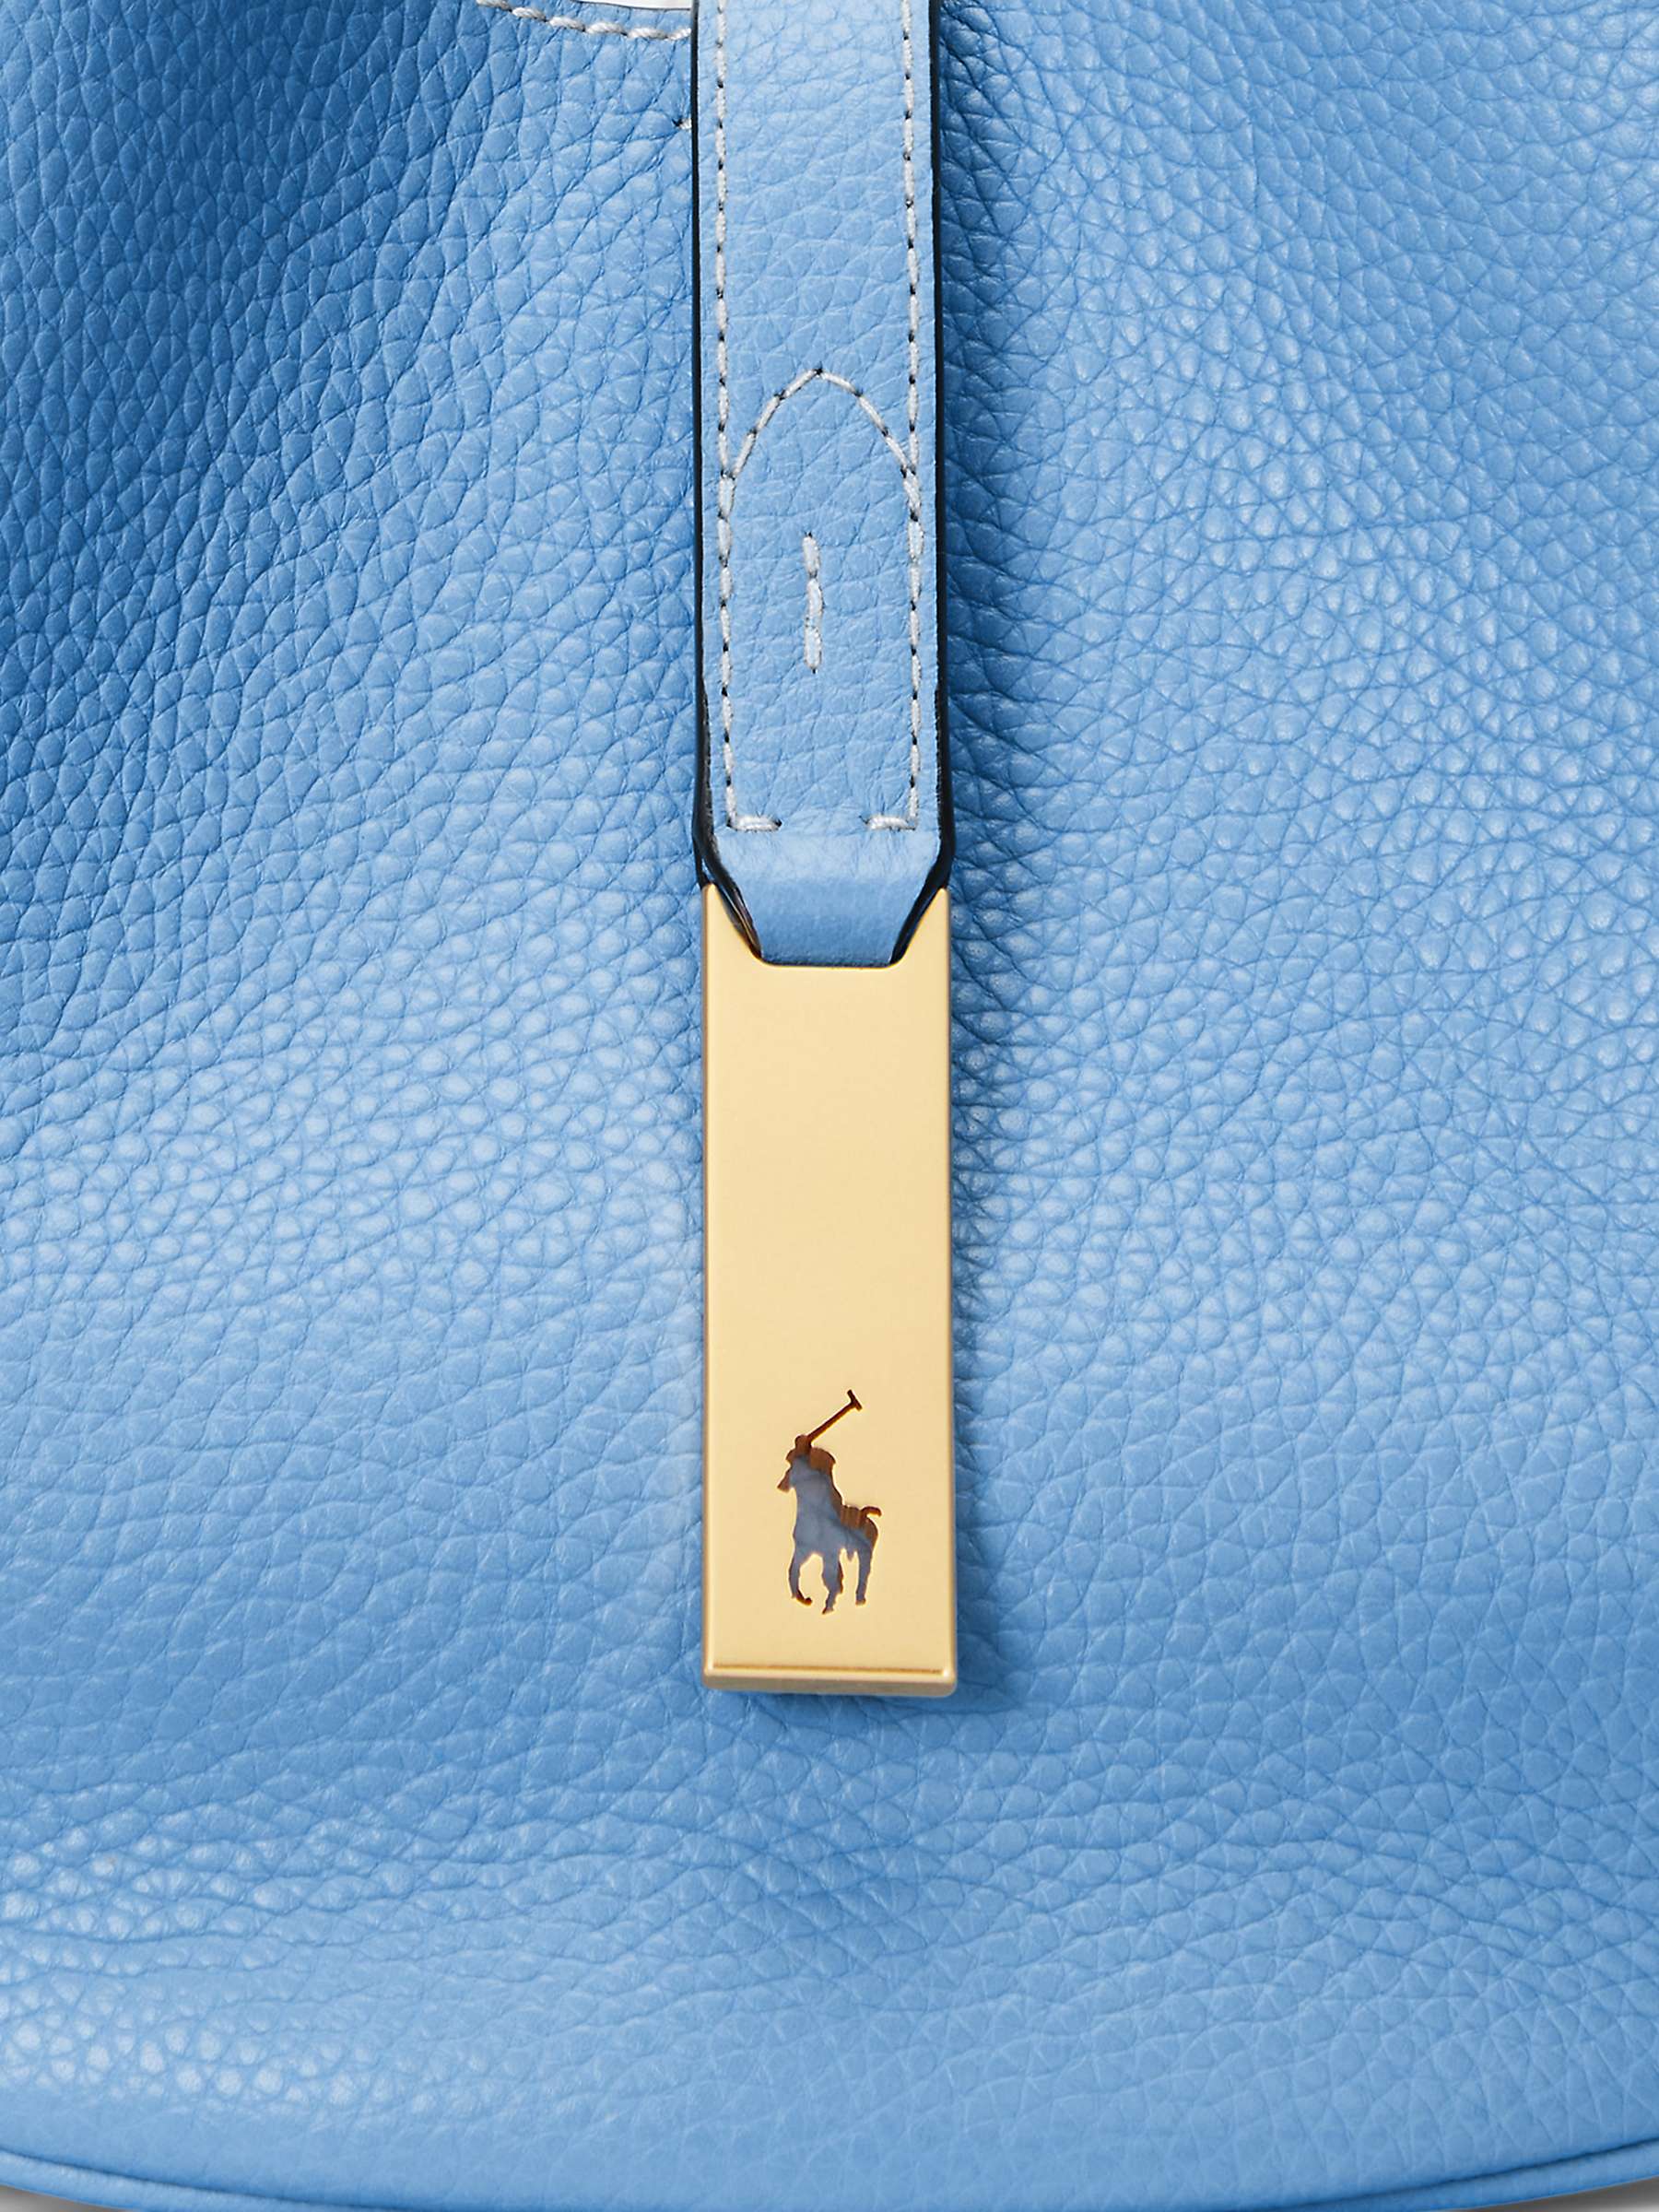 Buy Polo Ralph Lauren ID Small Leather Shoulder Bag, Azure Blue Online at johnlewis.com